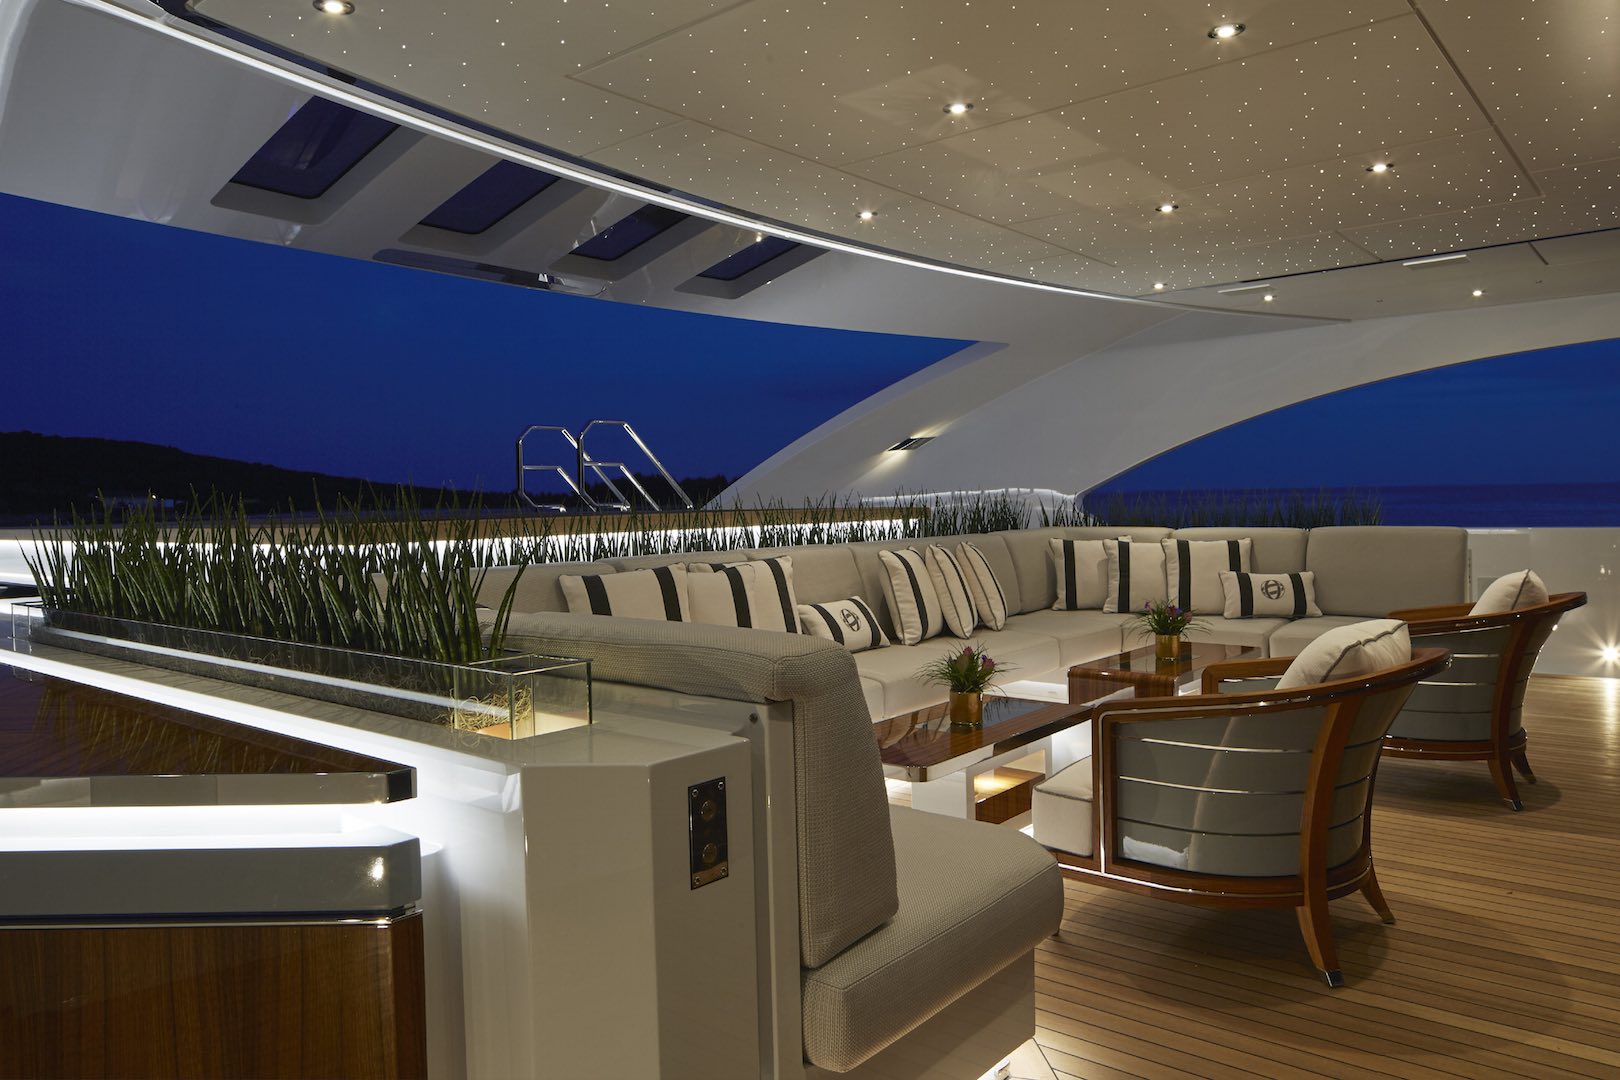 Inside Tiger Woods' $20m yacht